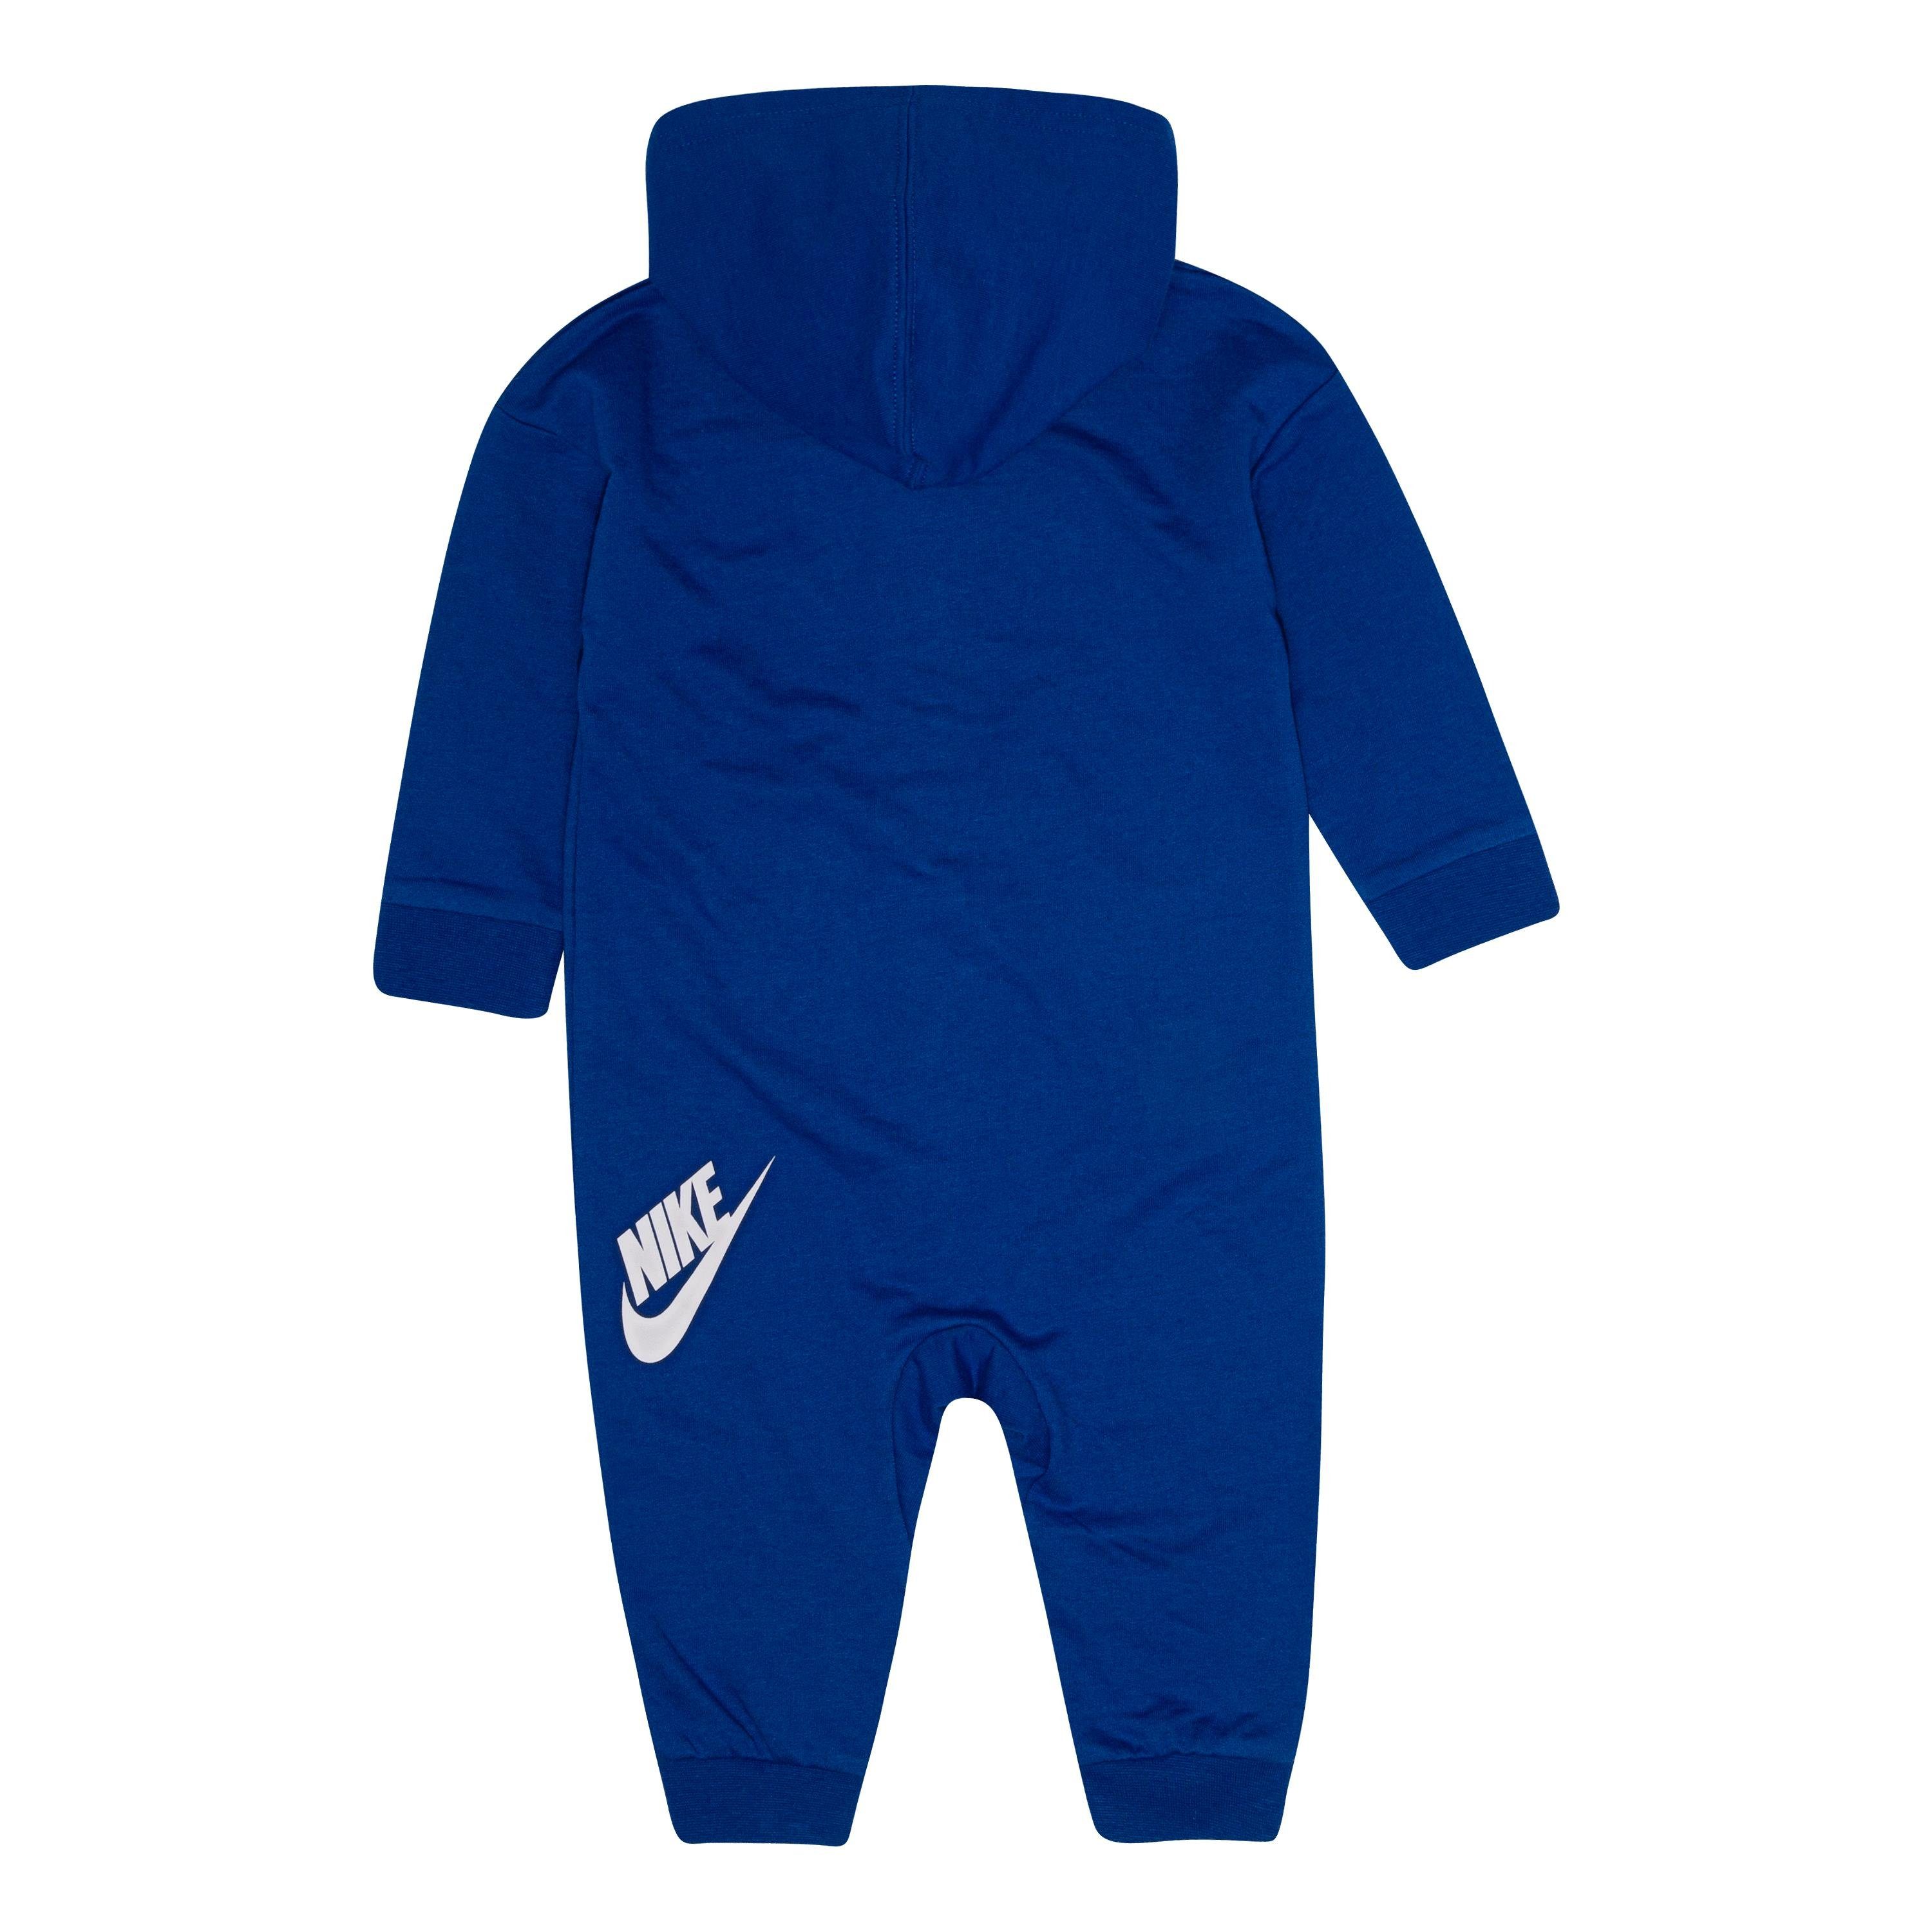 ALL Sportswear DAY Strampler COVERALL blau-weiß NKN Nike PLAY